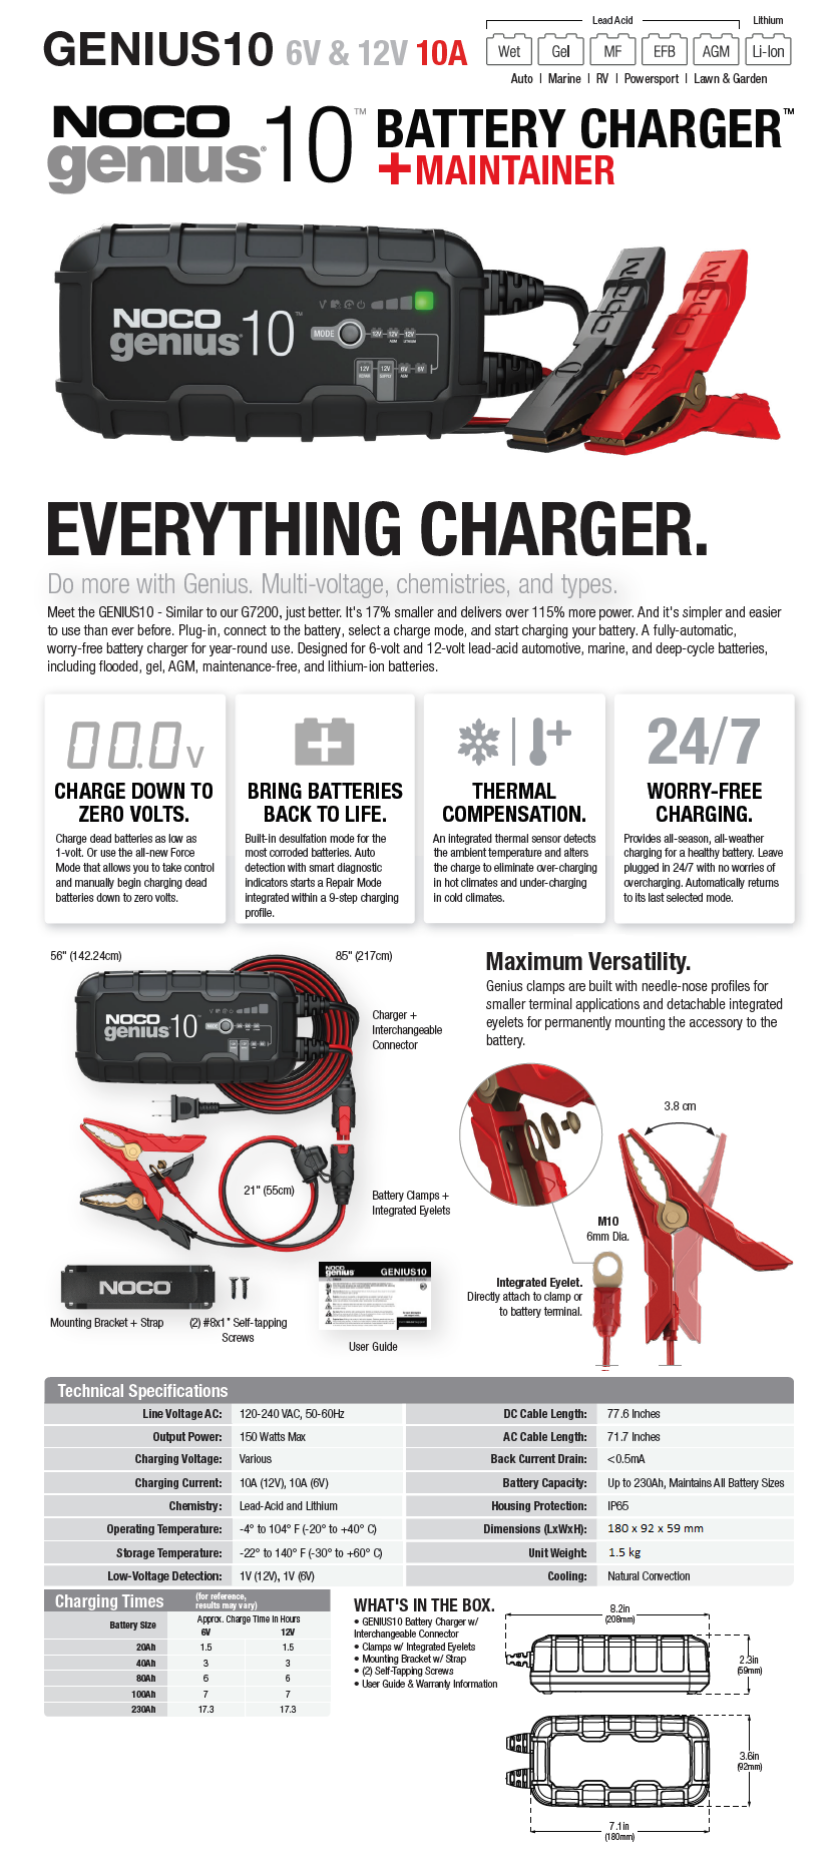 NOCO GENIUS10 NOCO GENIUS10 Smart Battery Chargers | DX Engineering